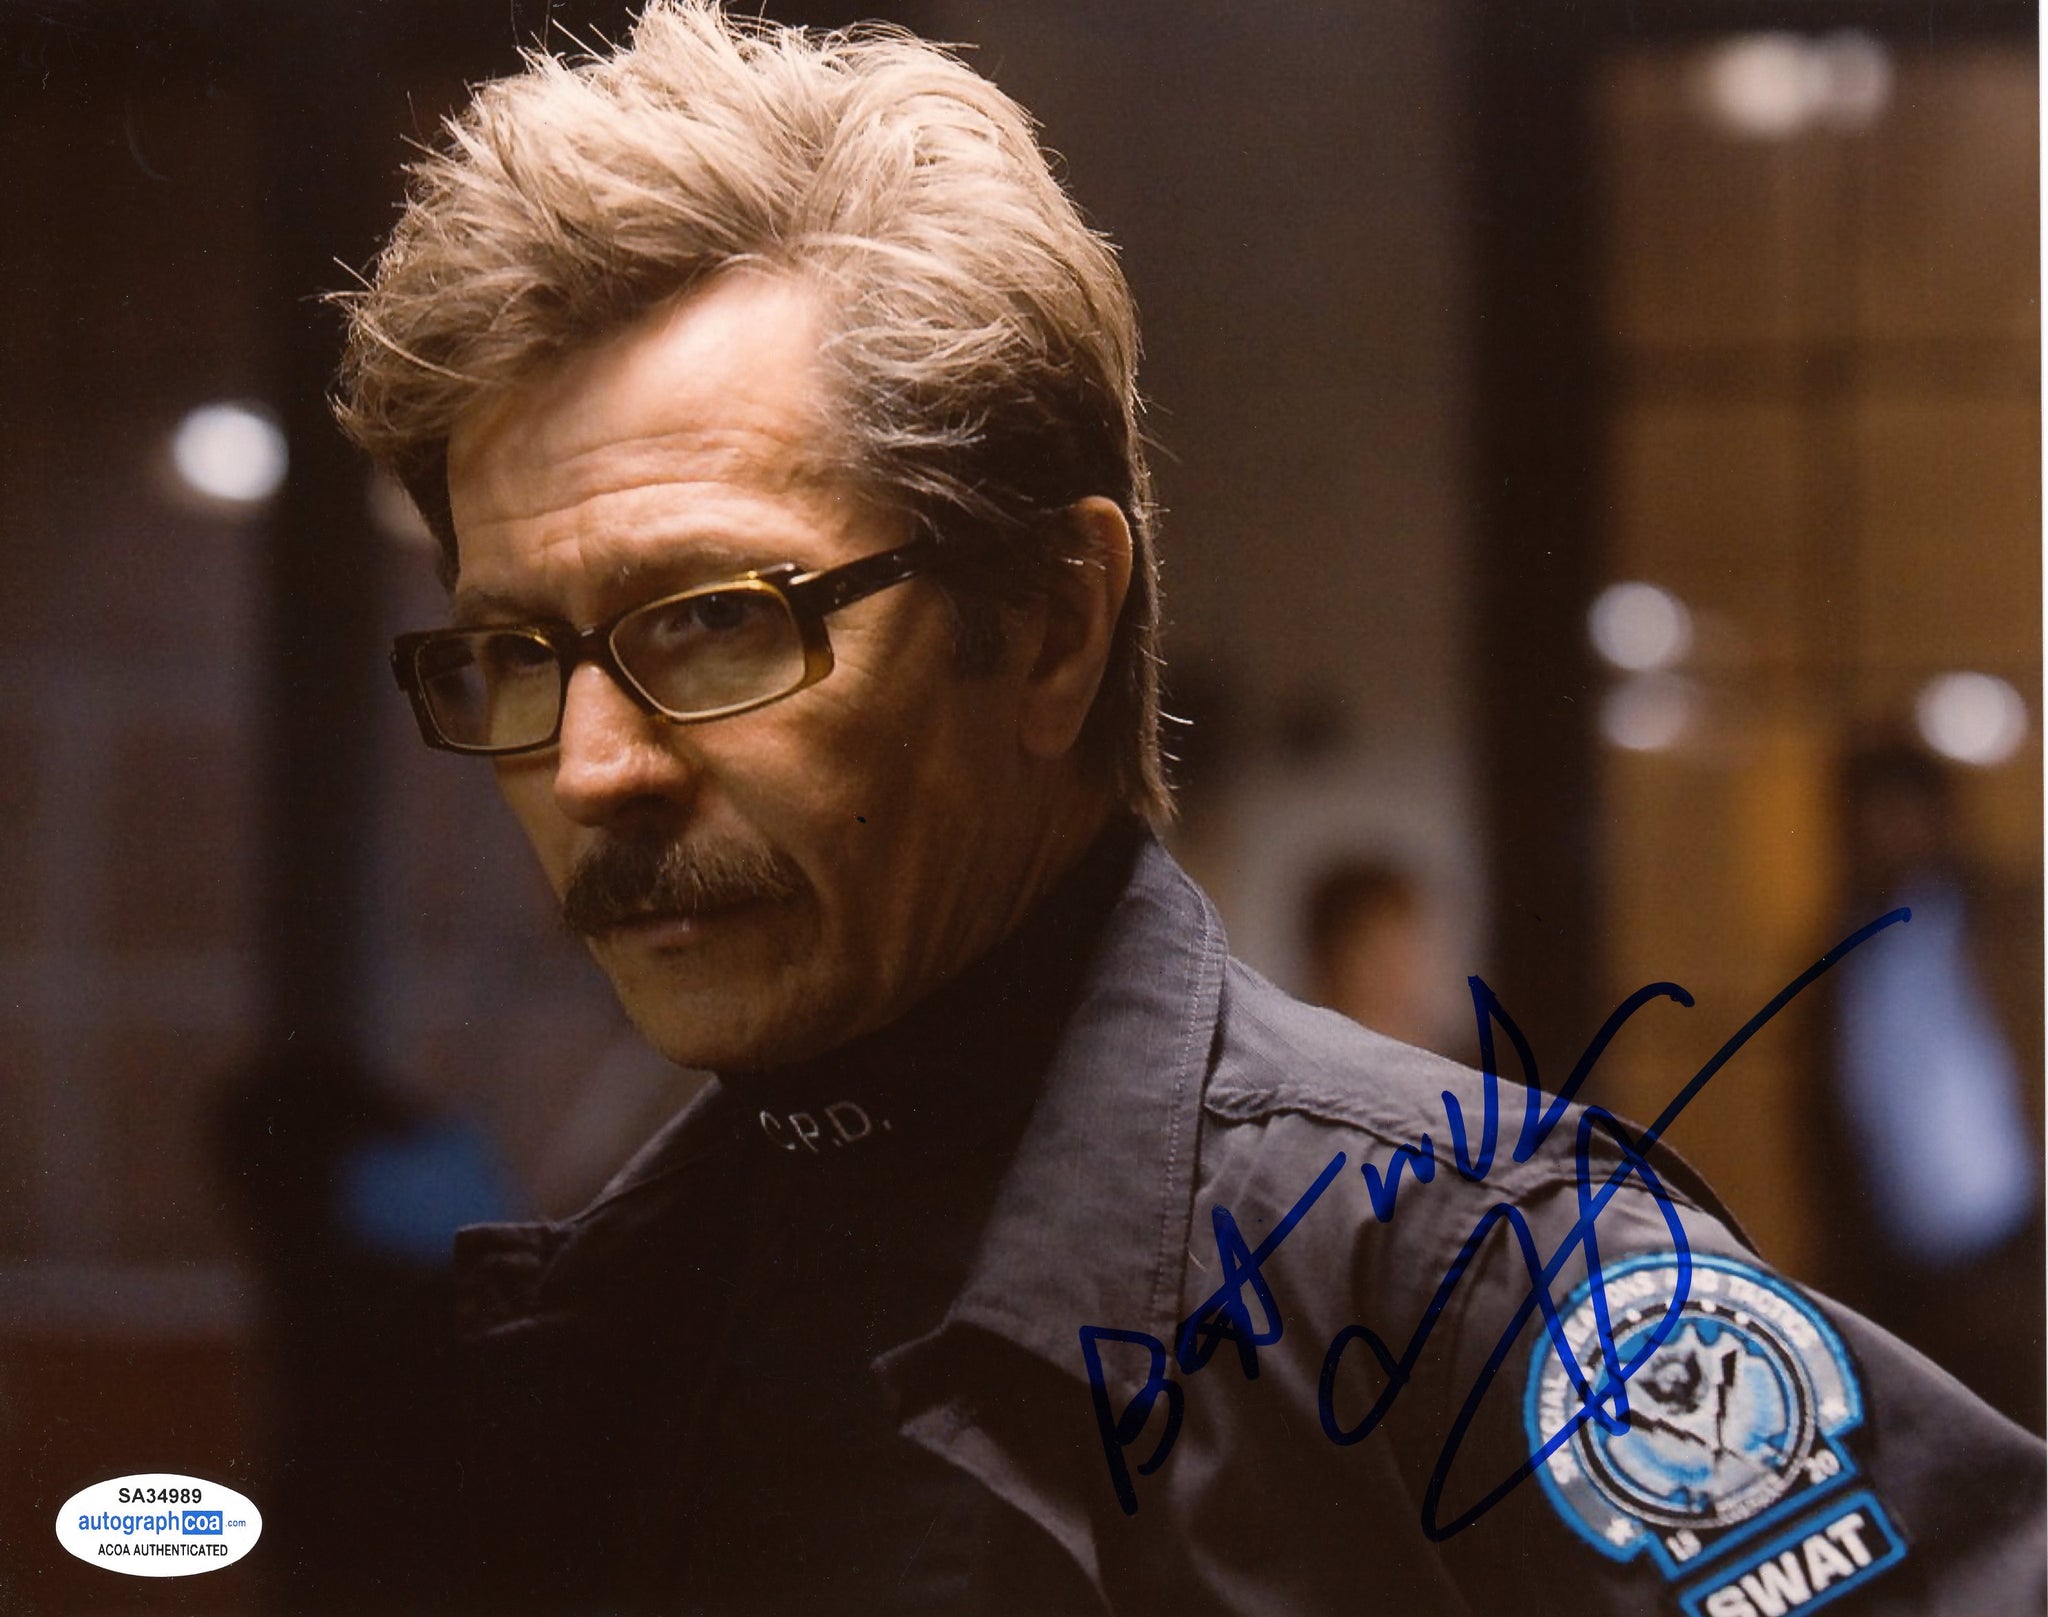 Gary Oldman Batman Dark Knight Signed Autograph 8x10 Photo ACOA #4 - Outlaw Hobbies Authentic Autographs